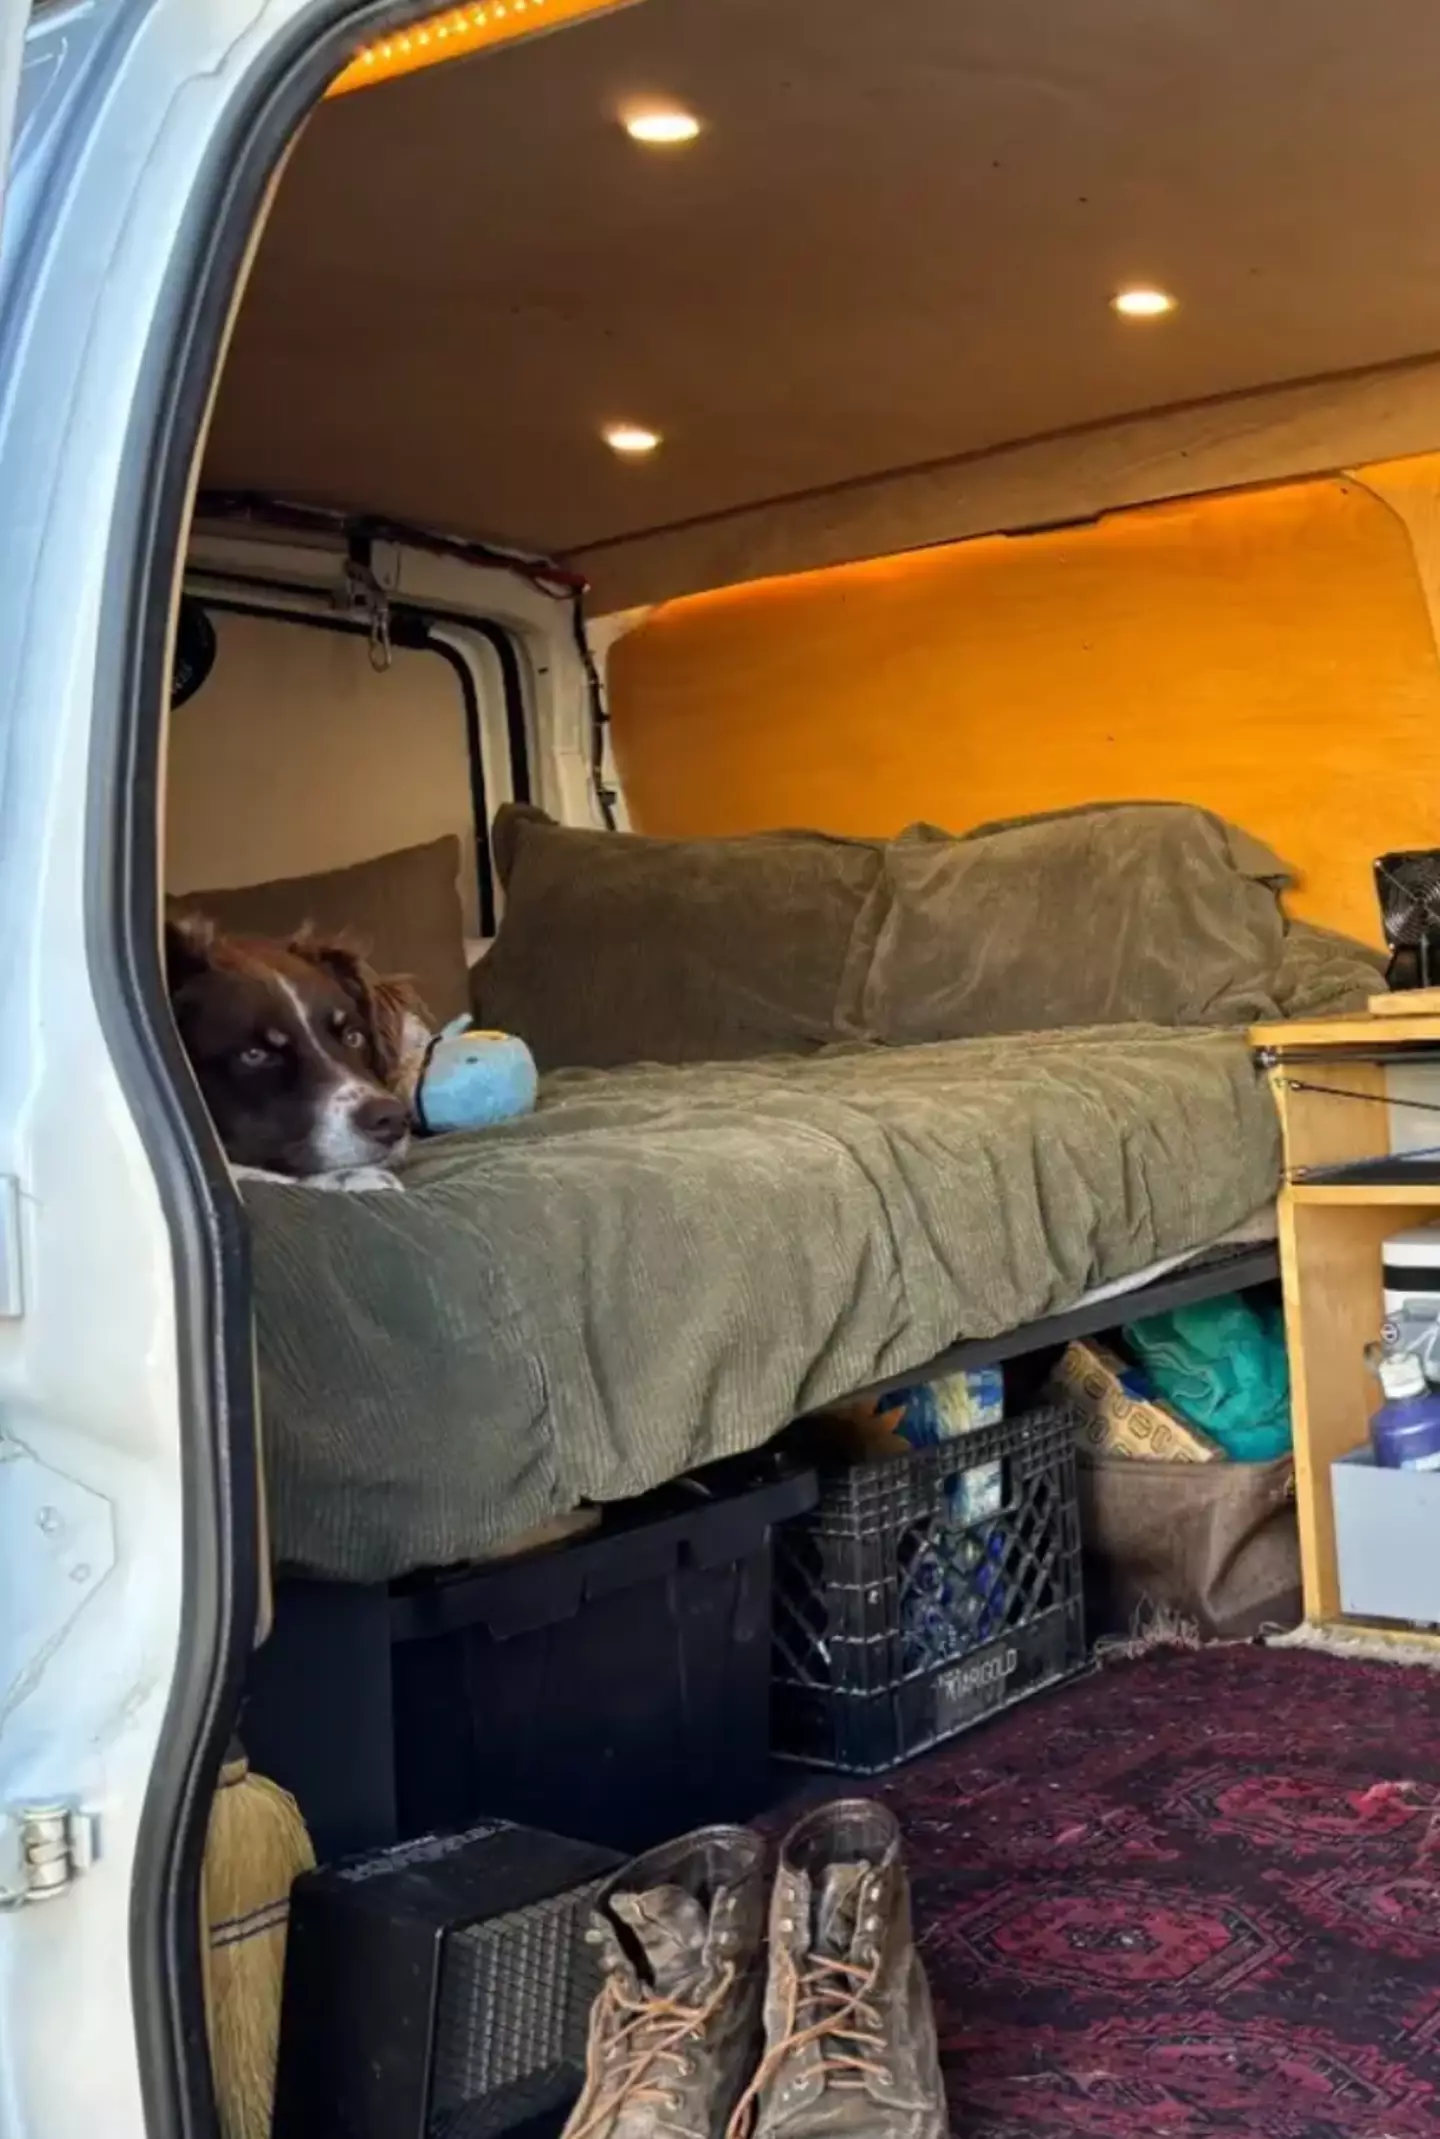 The landlord is now living in his van.